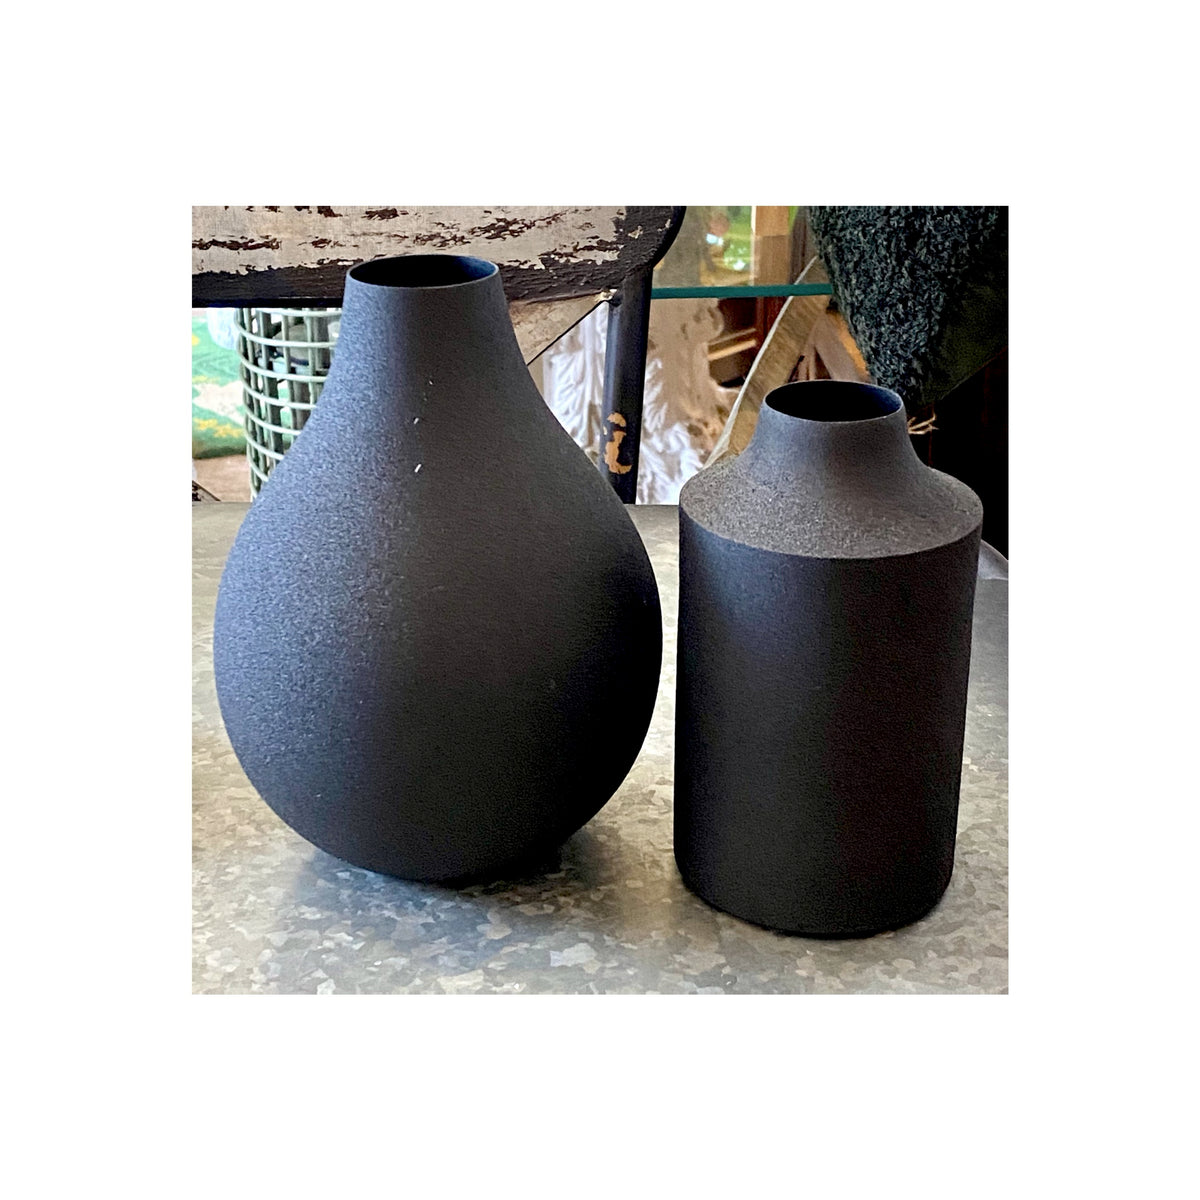 Textured Black Vases